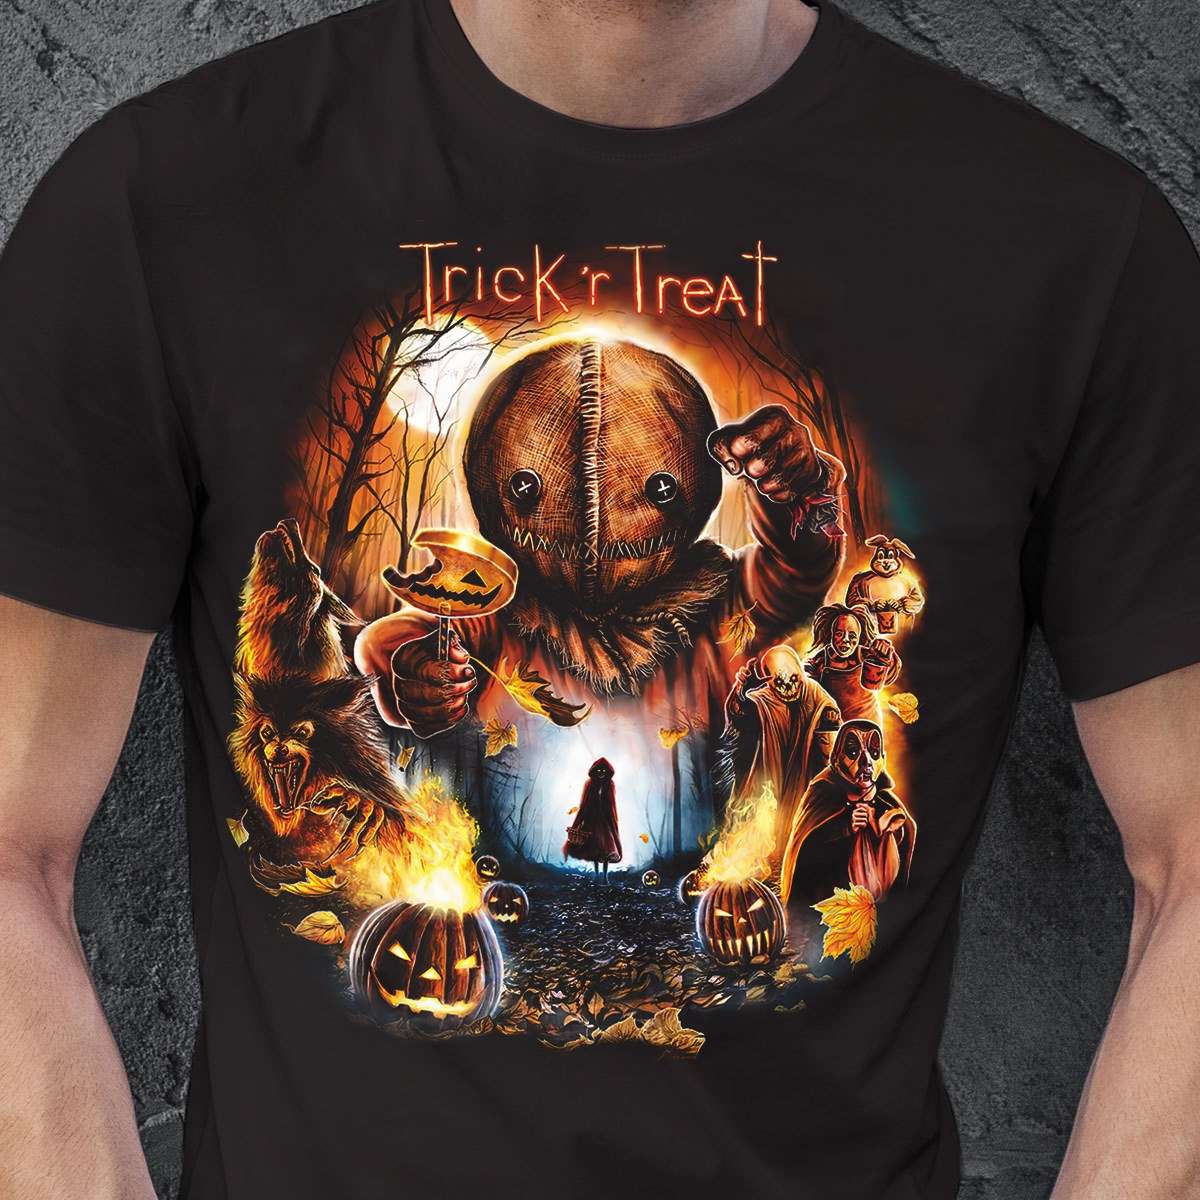 Trick or treat - Halloween costume night, Halloween scary shirt